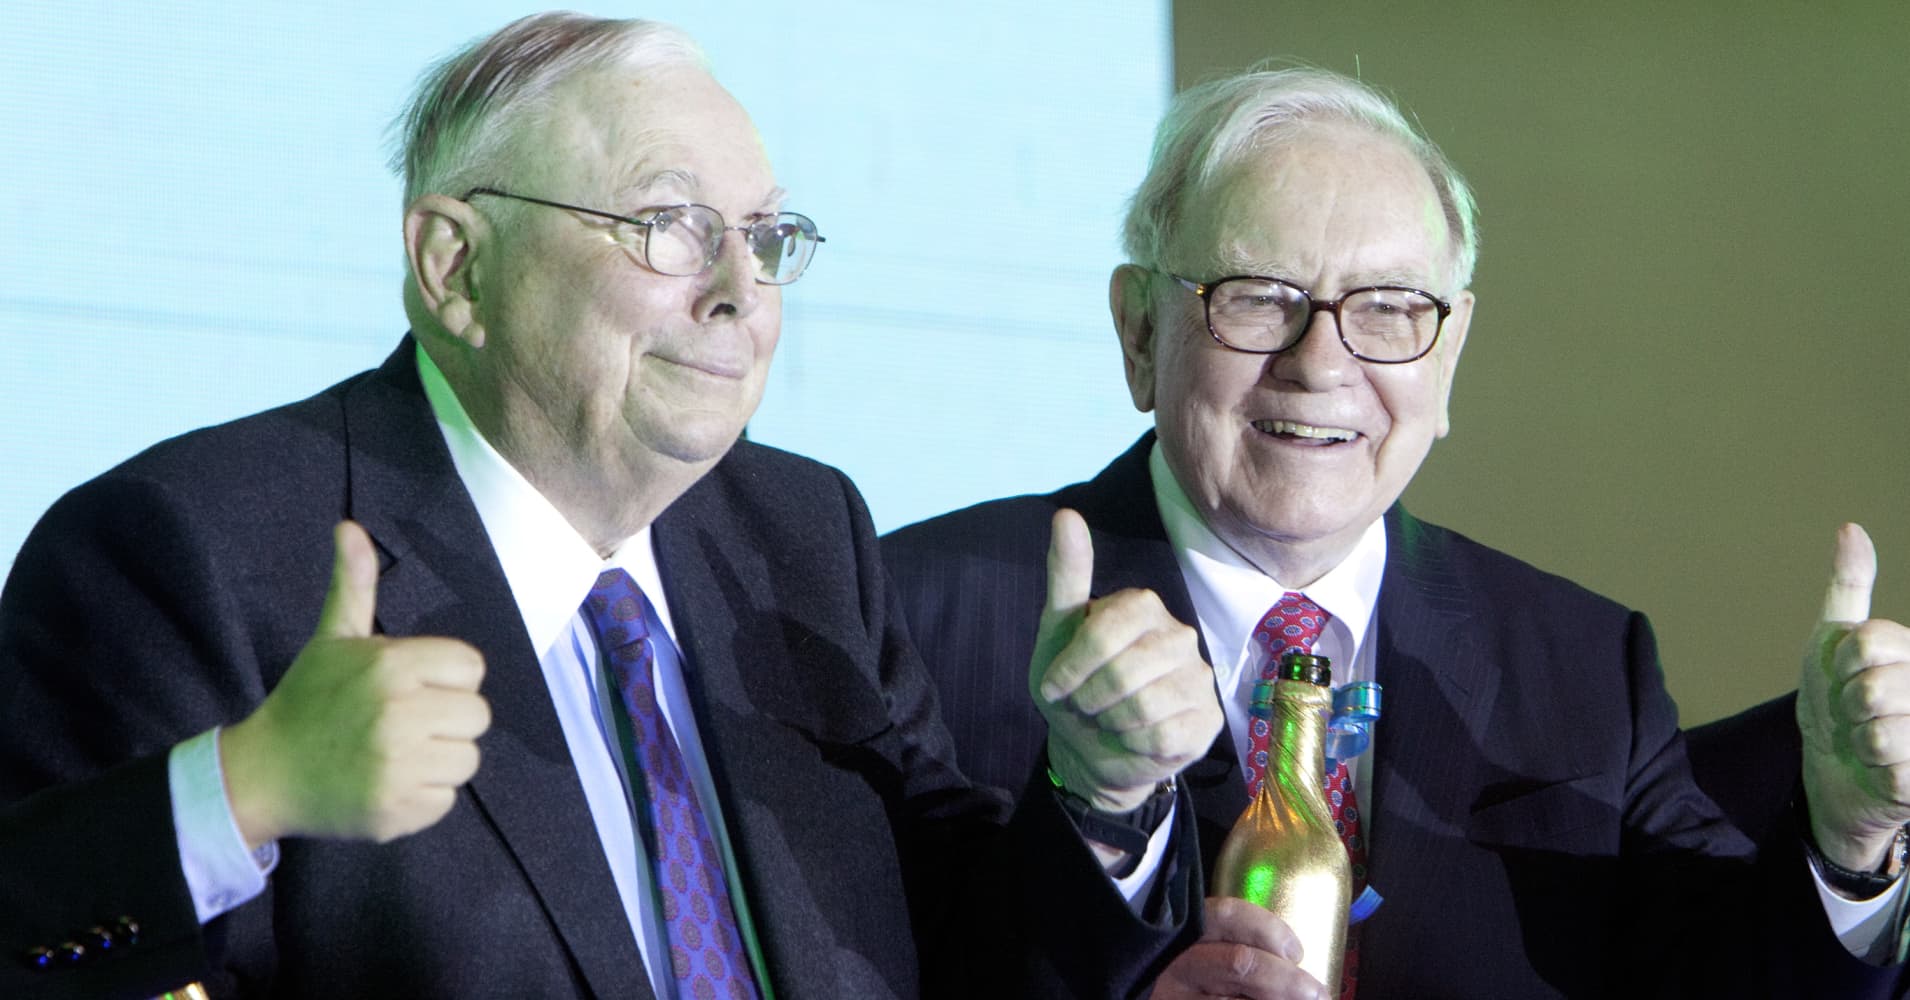 Charles Munger, vice chairman of Berkshire Hathaway Inc., left, and Warren Buffett, chairman of Berkshire Hathaway Inc.